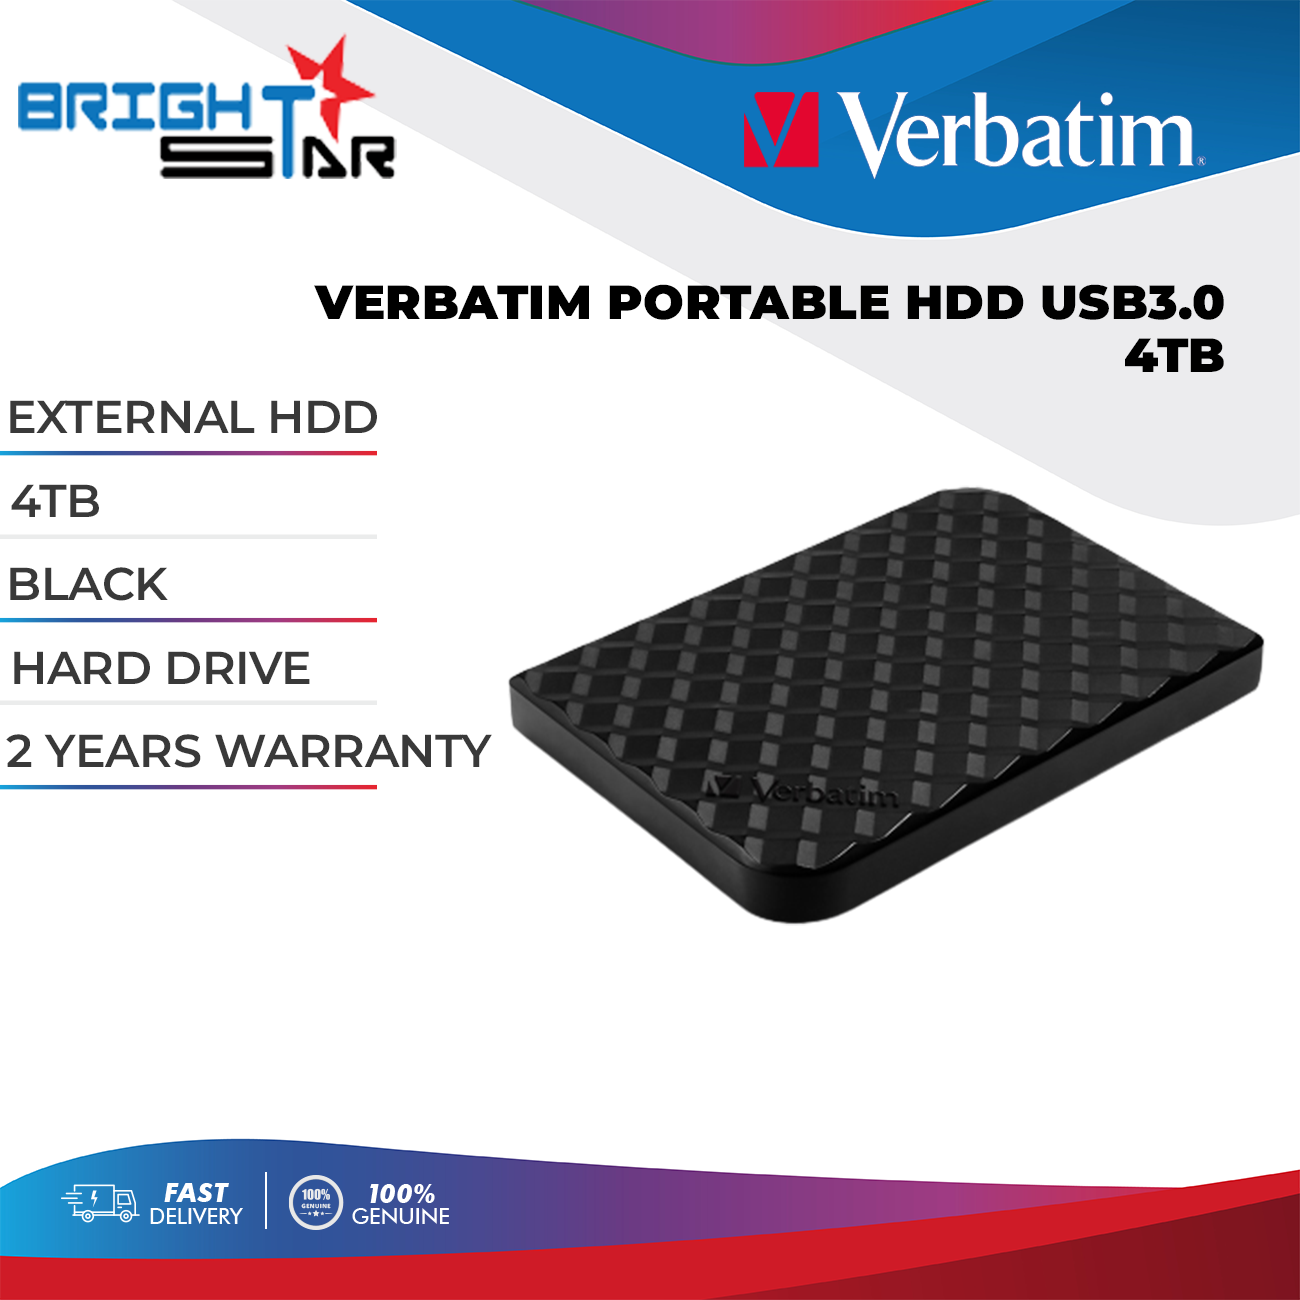 VERBATIM PORTABLE HDD USB3.0 4TB BLACK EXTERNAL DRIVE - Brightstar